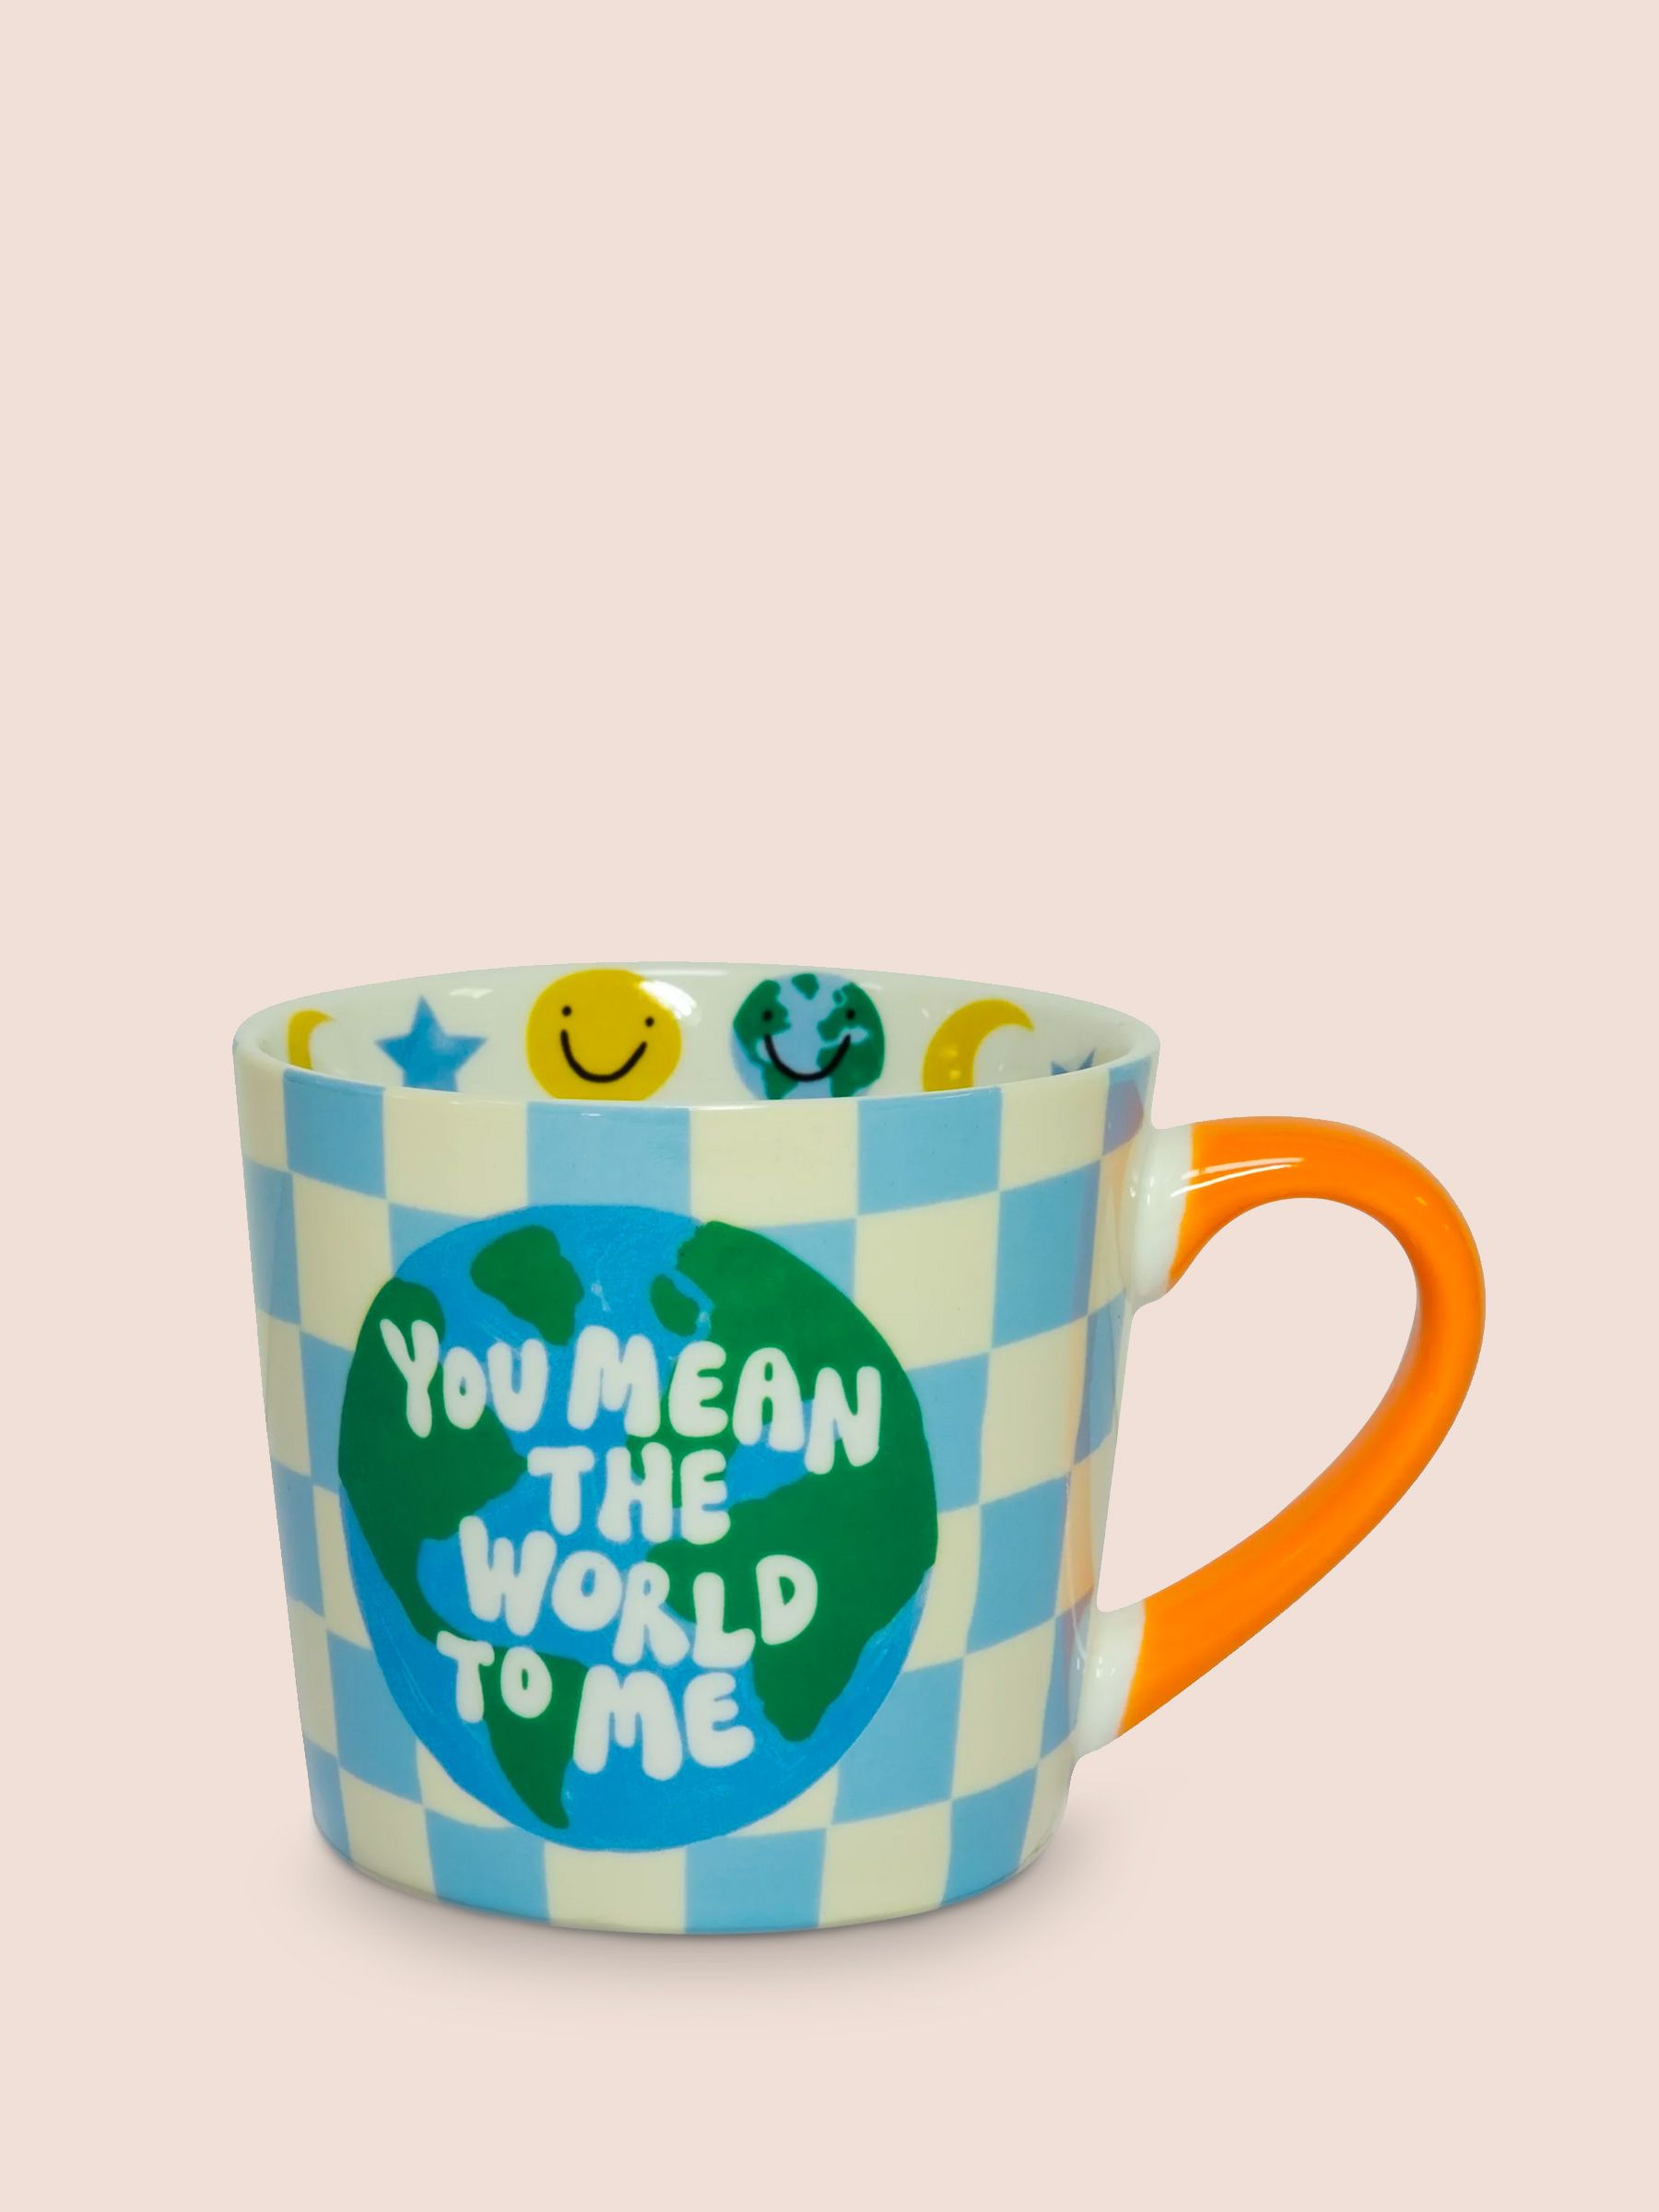 You Mean The World to Me mug, £11.95